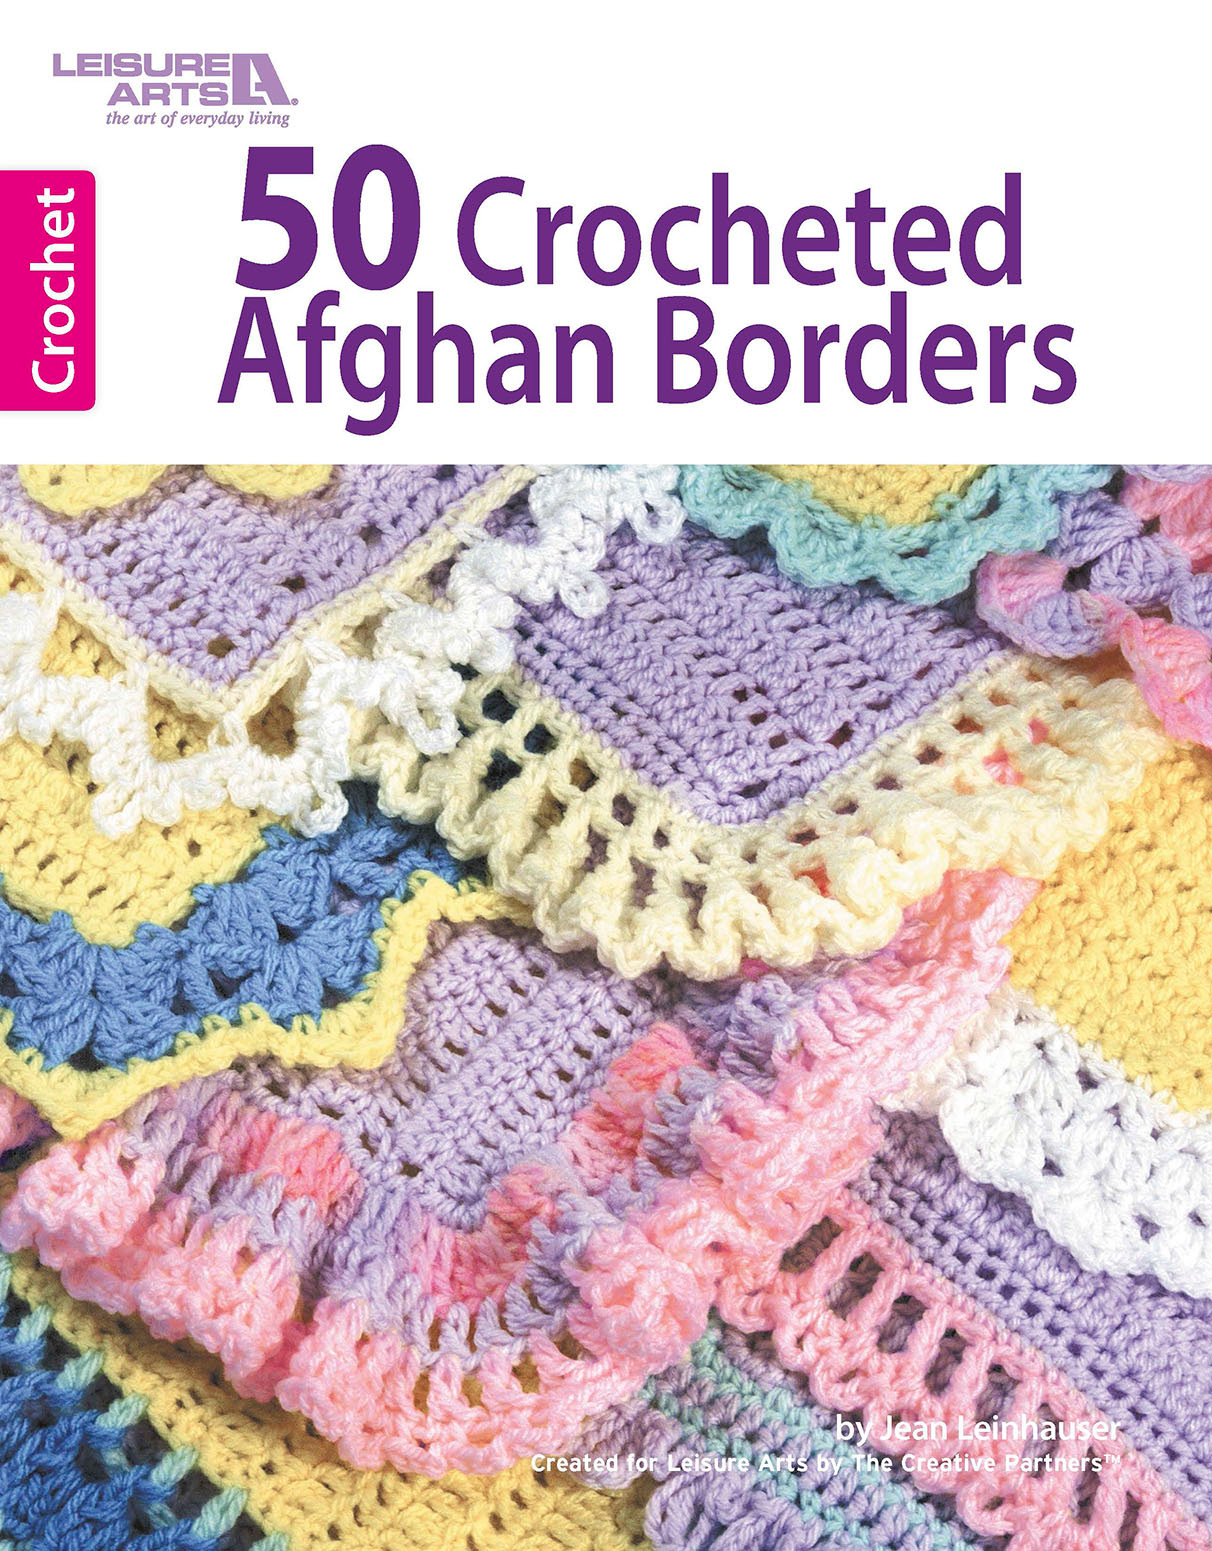 Leisure Arts 50-Crocheted Afghan Borders